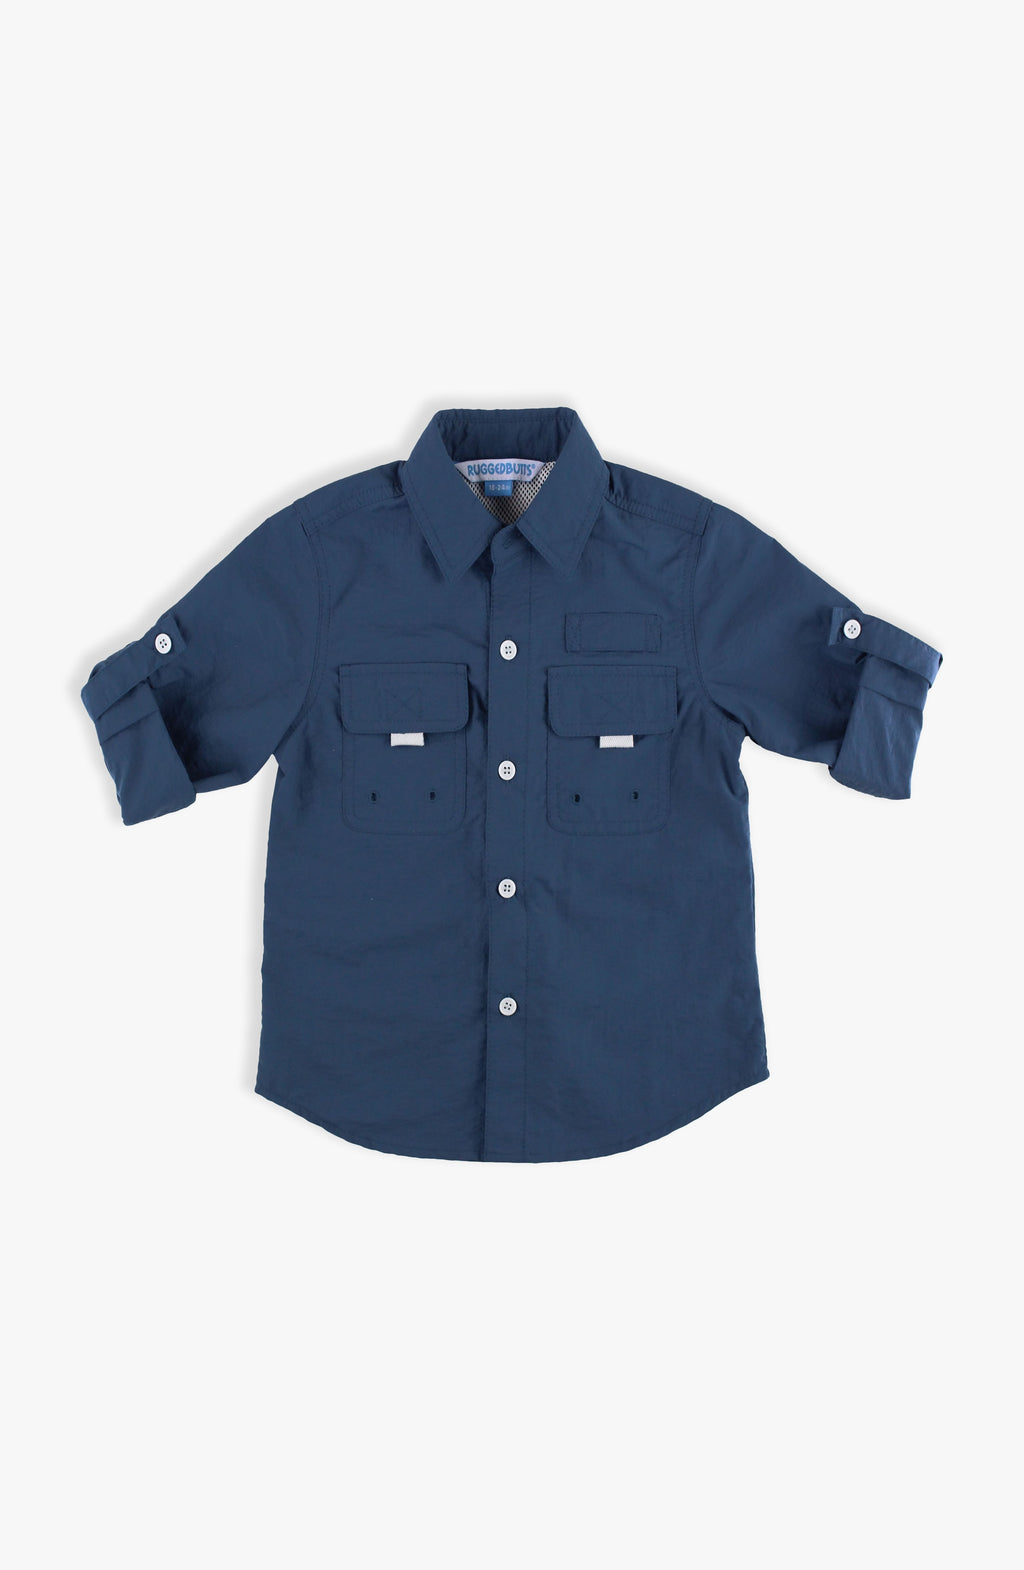 Navy Blue Sun Protective Button Down Shirt